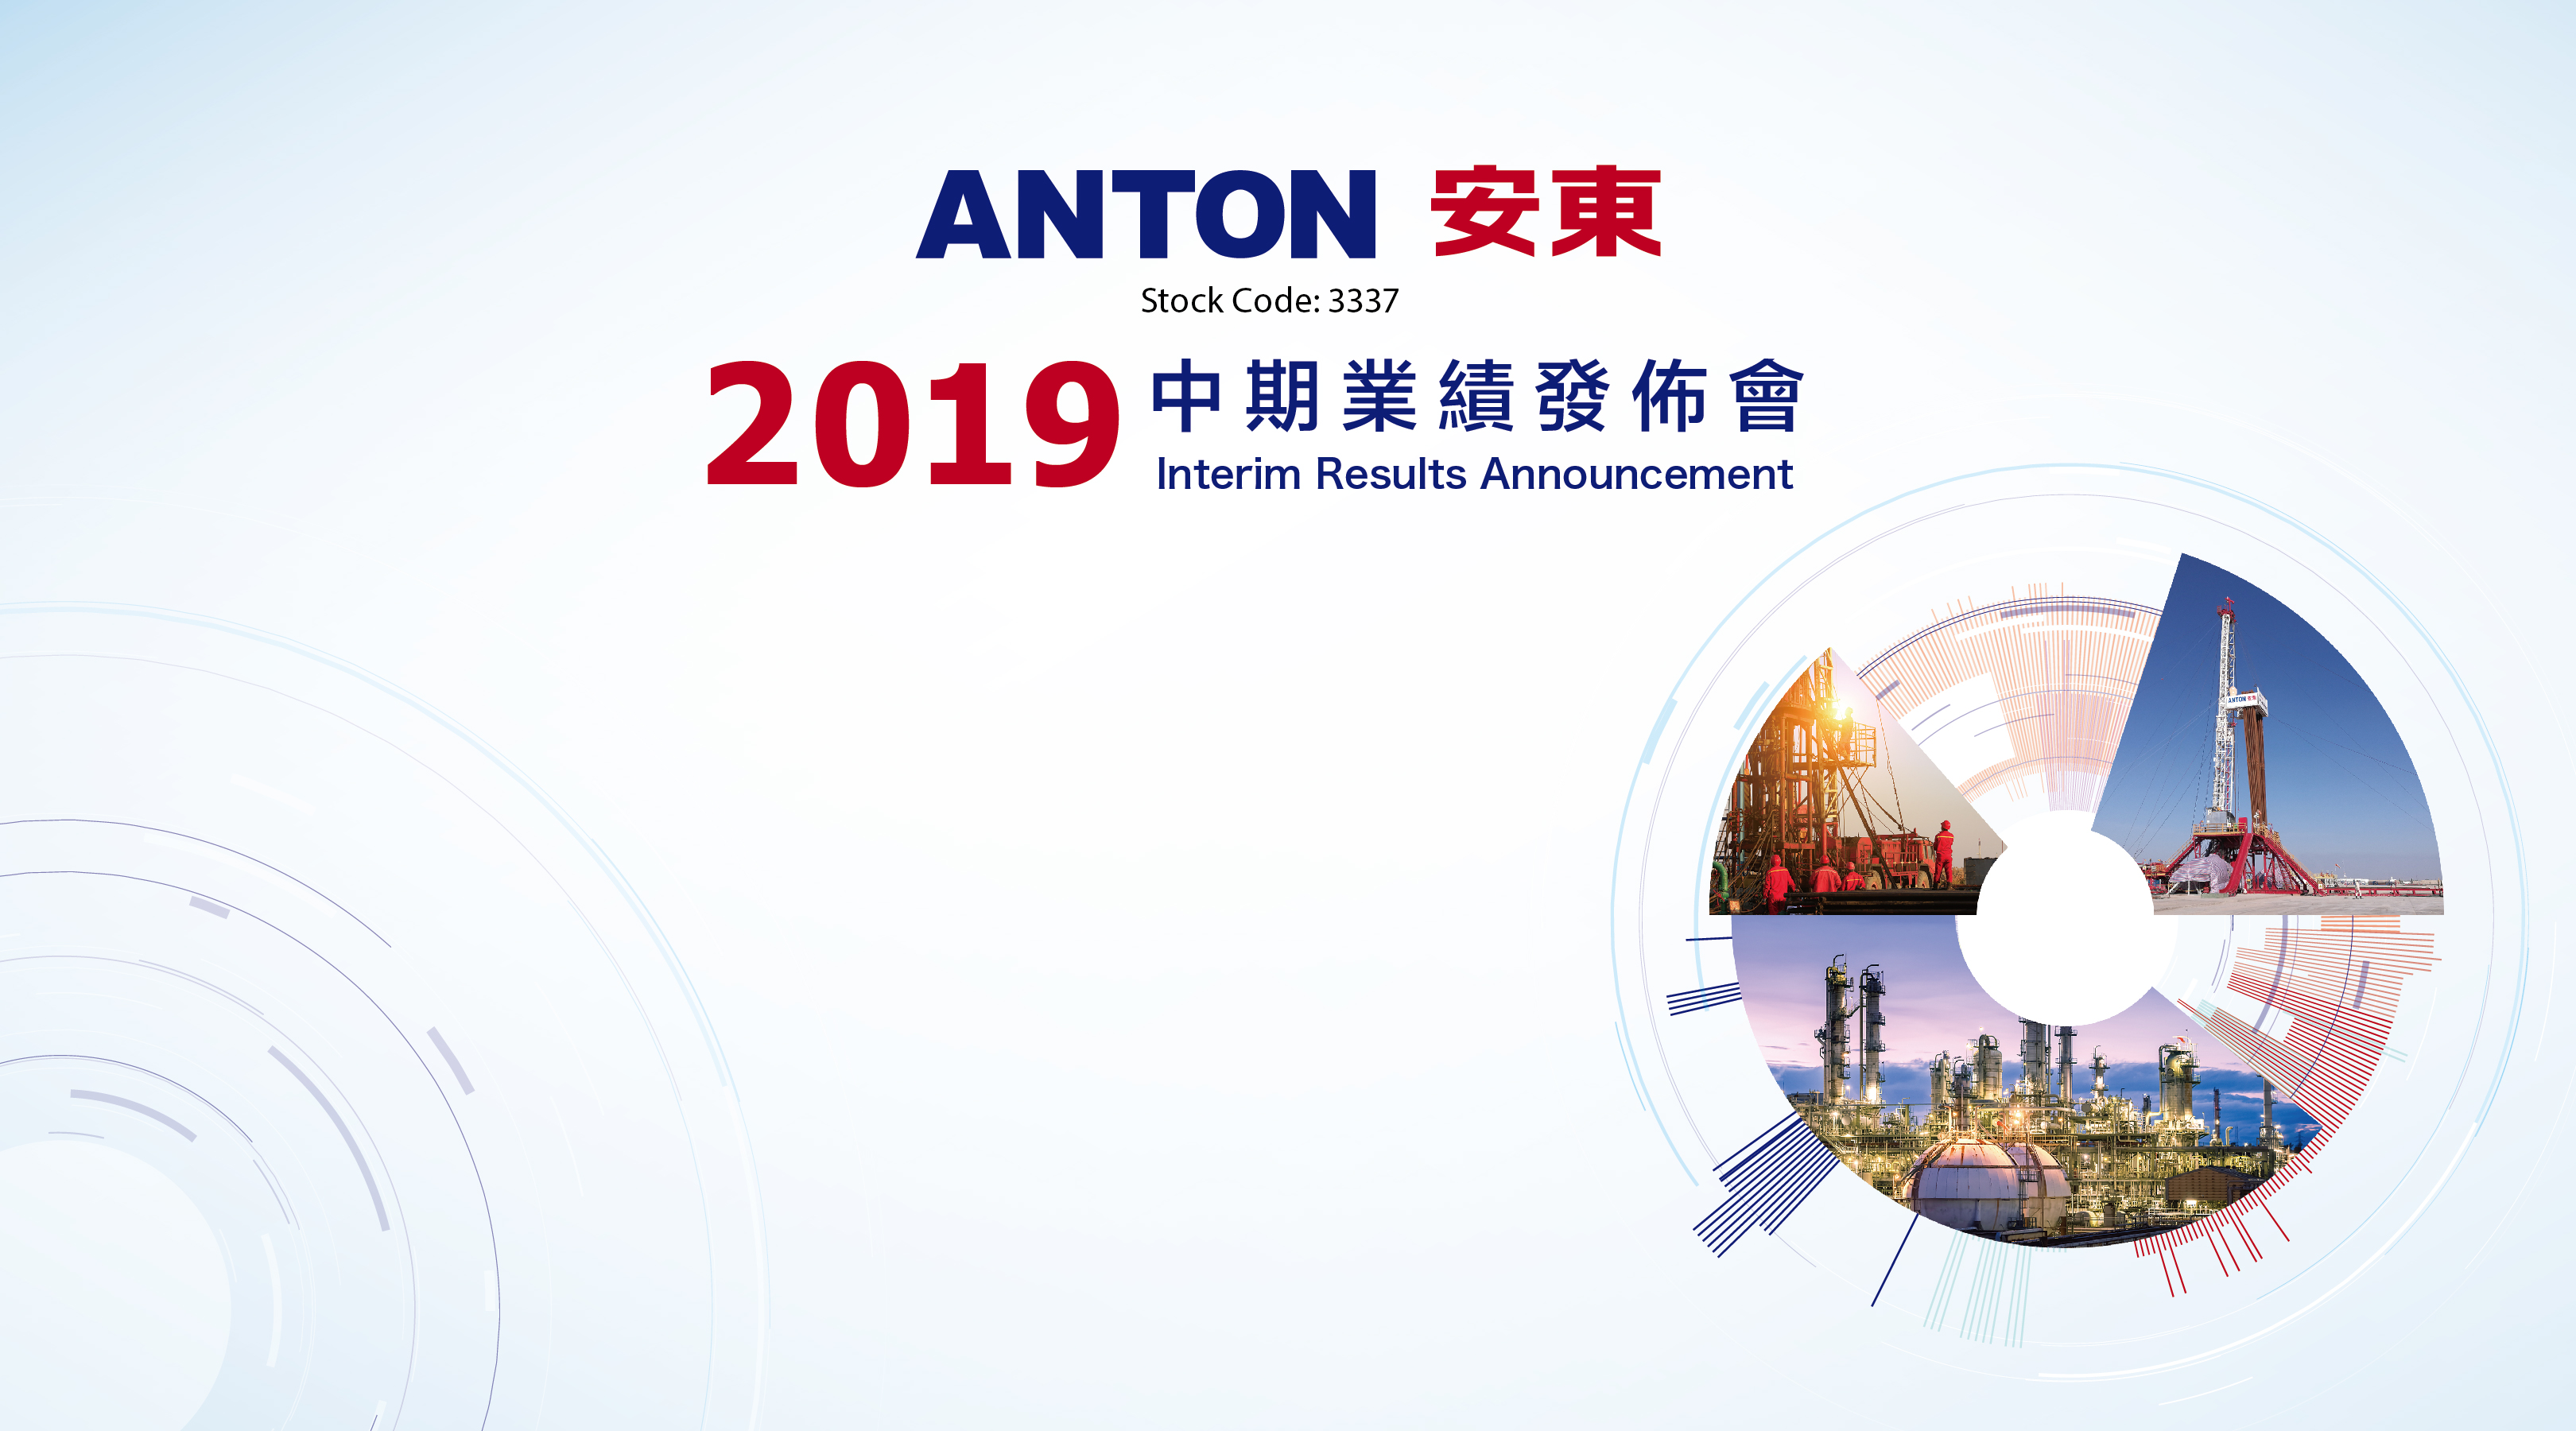 Anton Oilfield Services Group Announces 2019 Interim Results